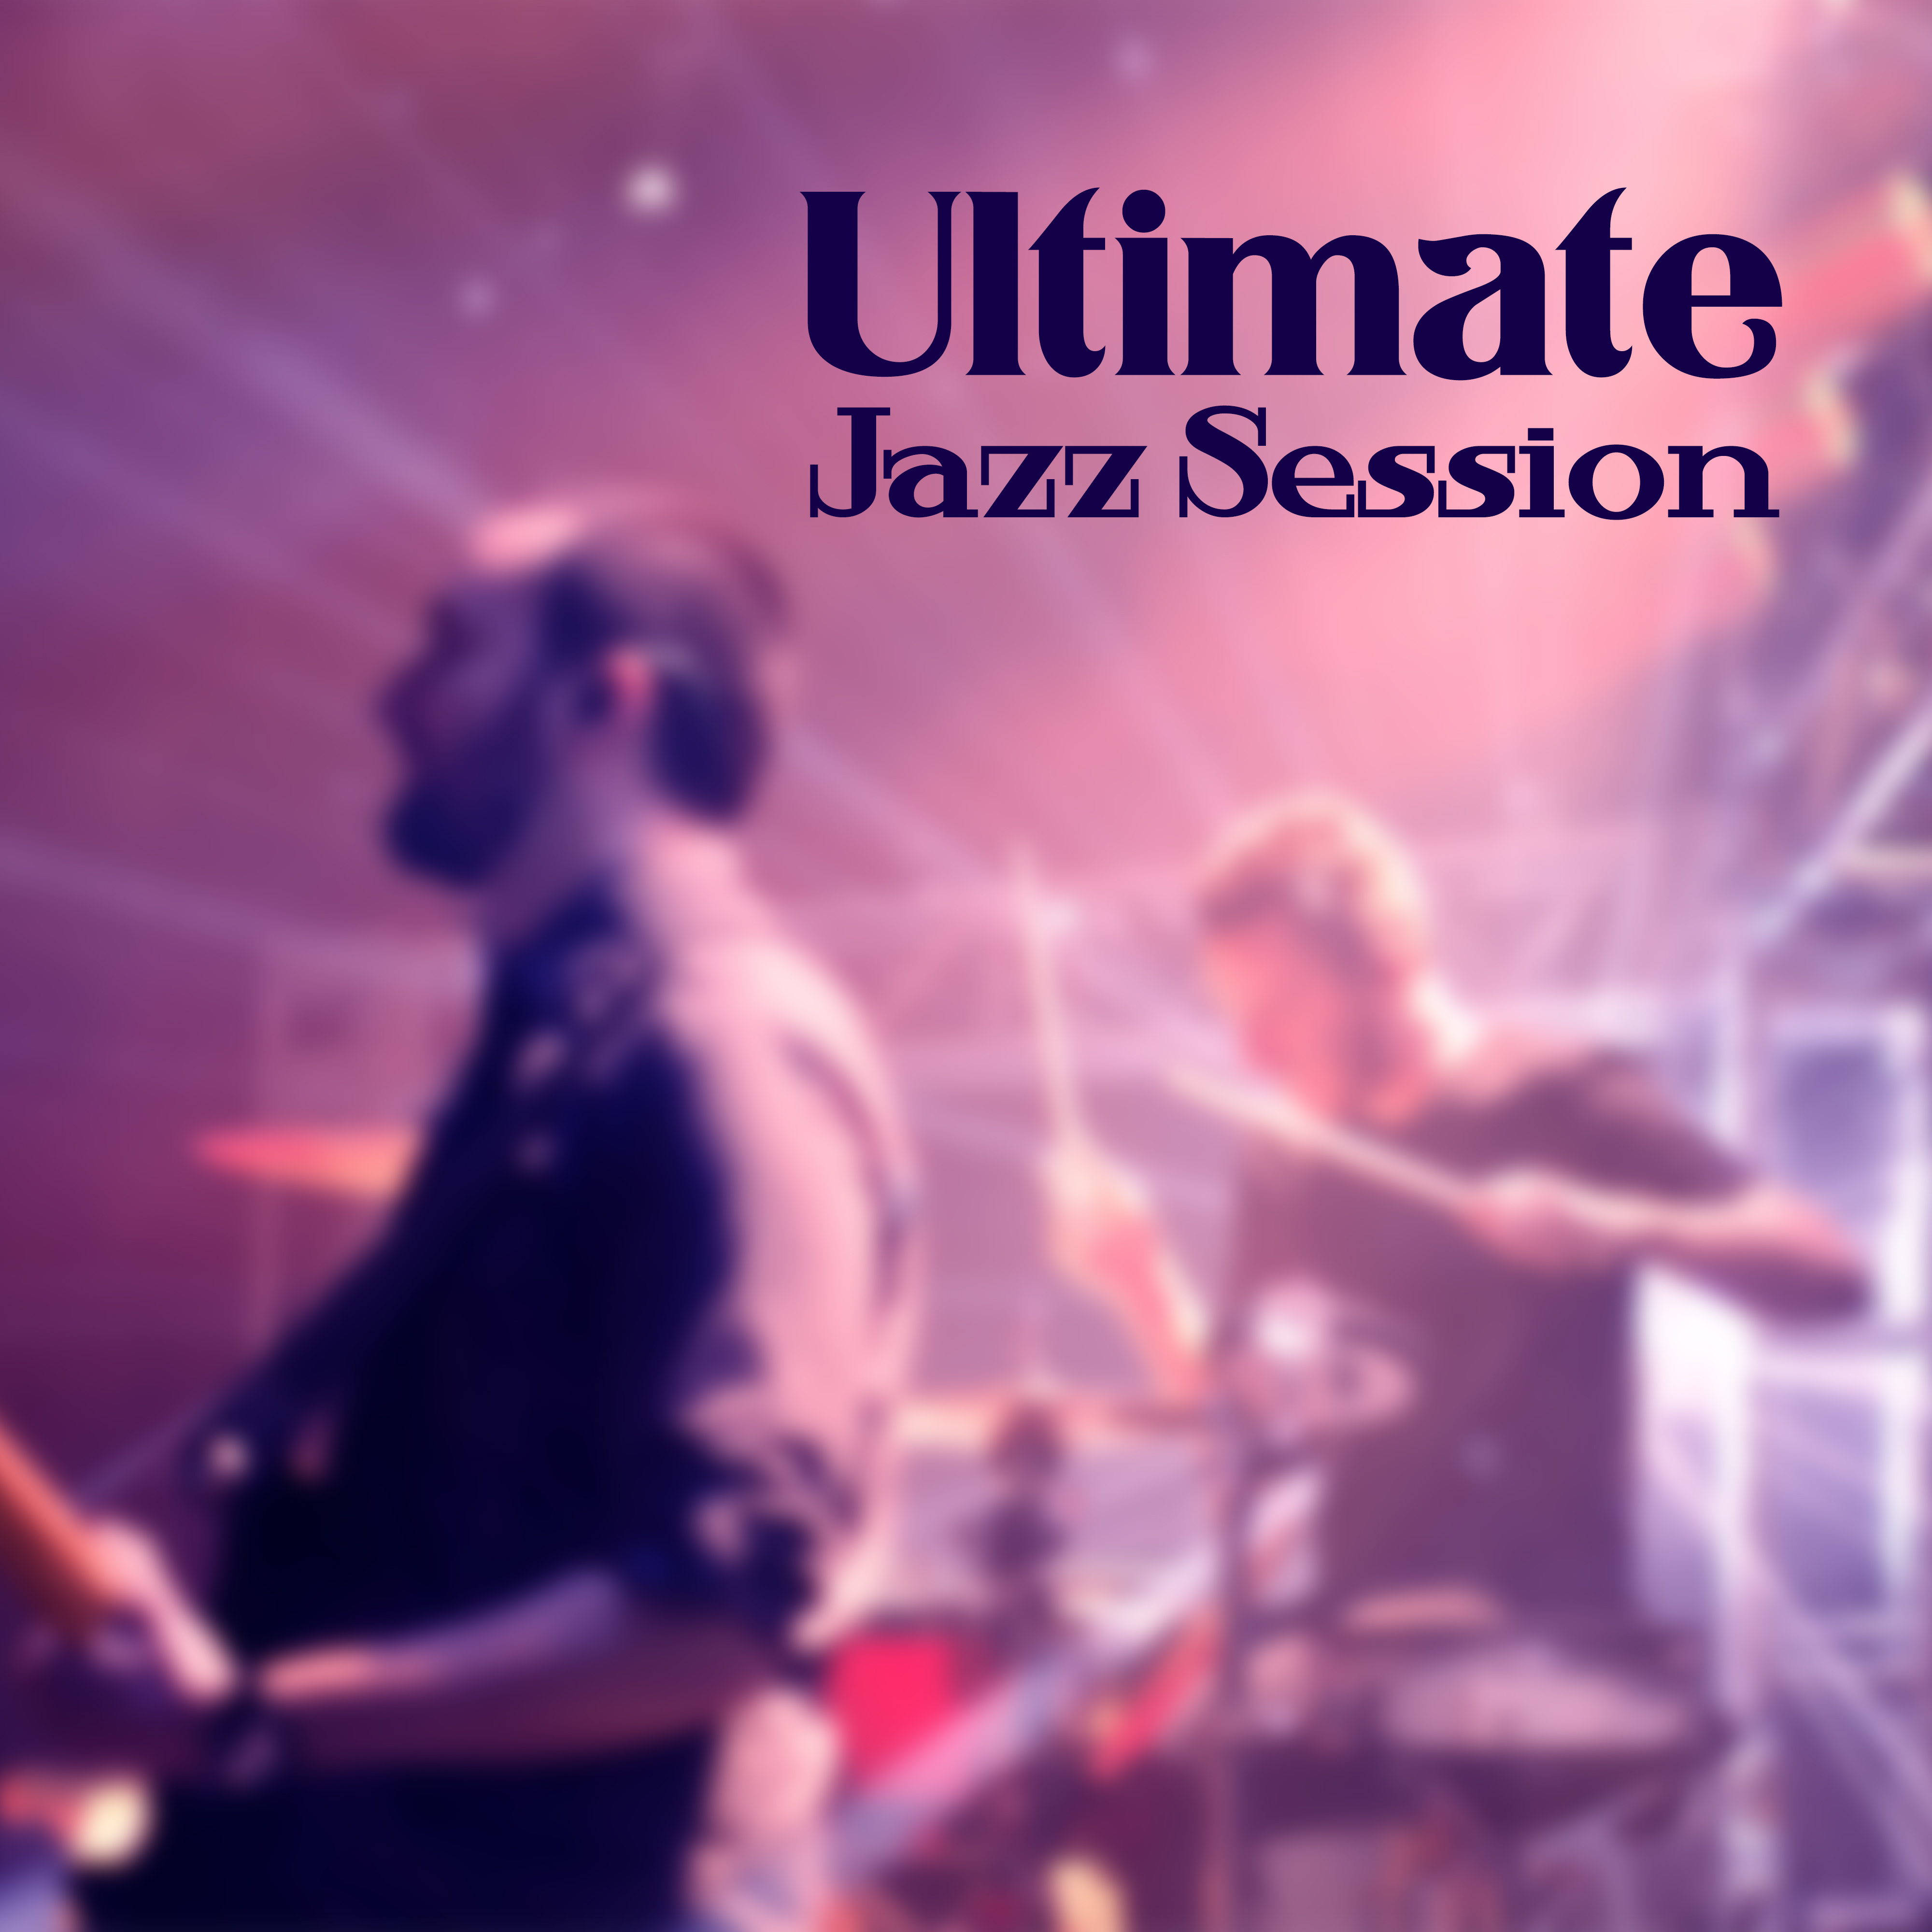 Ultimate Jazz Session  Long Evening, Jazz Session, Gold Jazz, Piano Bar, Friday Night